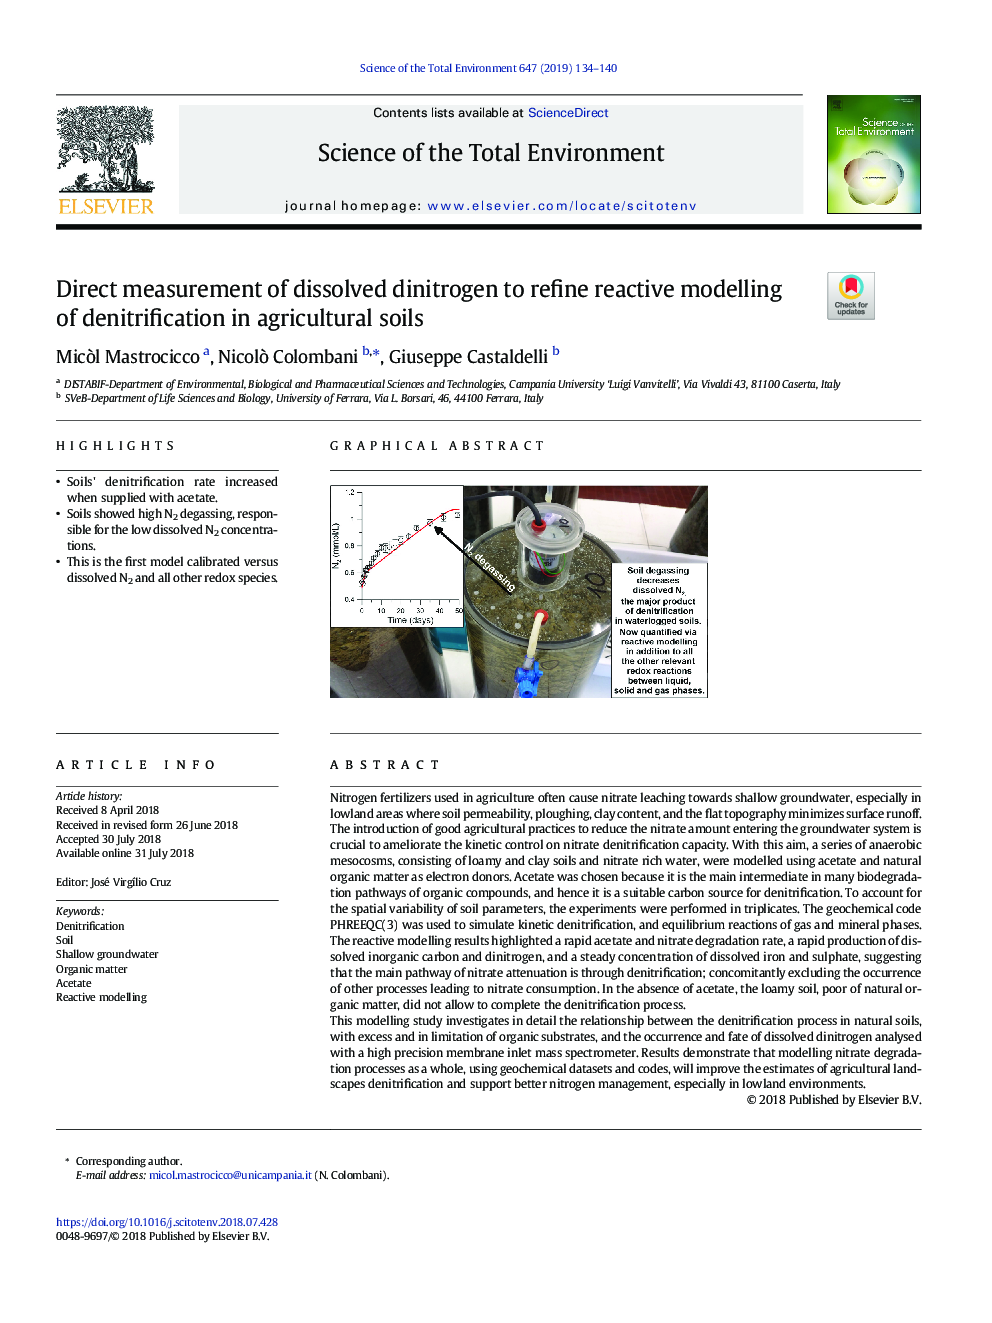 Direct measurement of dissolved dinitrogen to refine reactive modelling of denitrification in agricultural soils